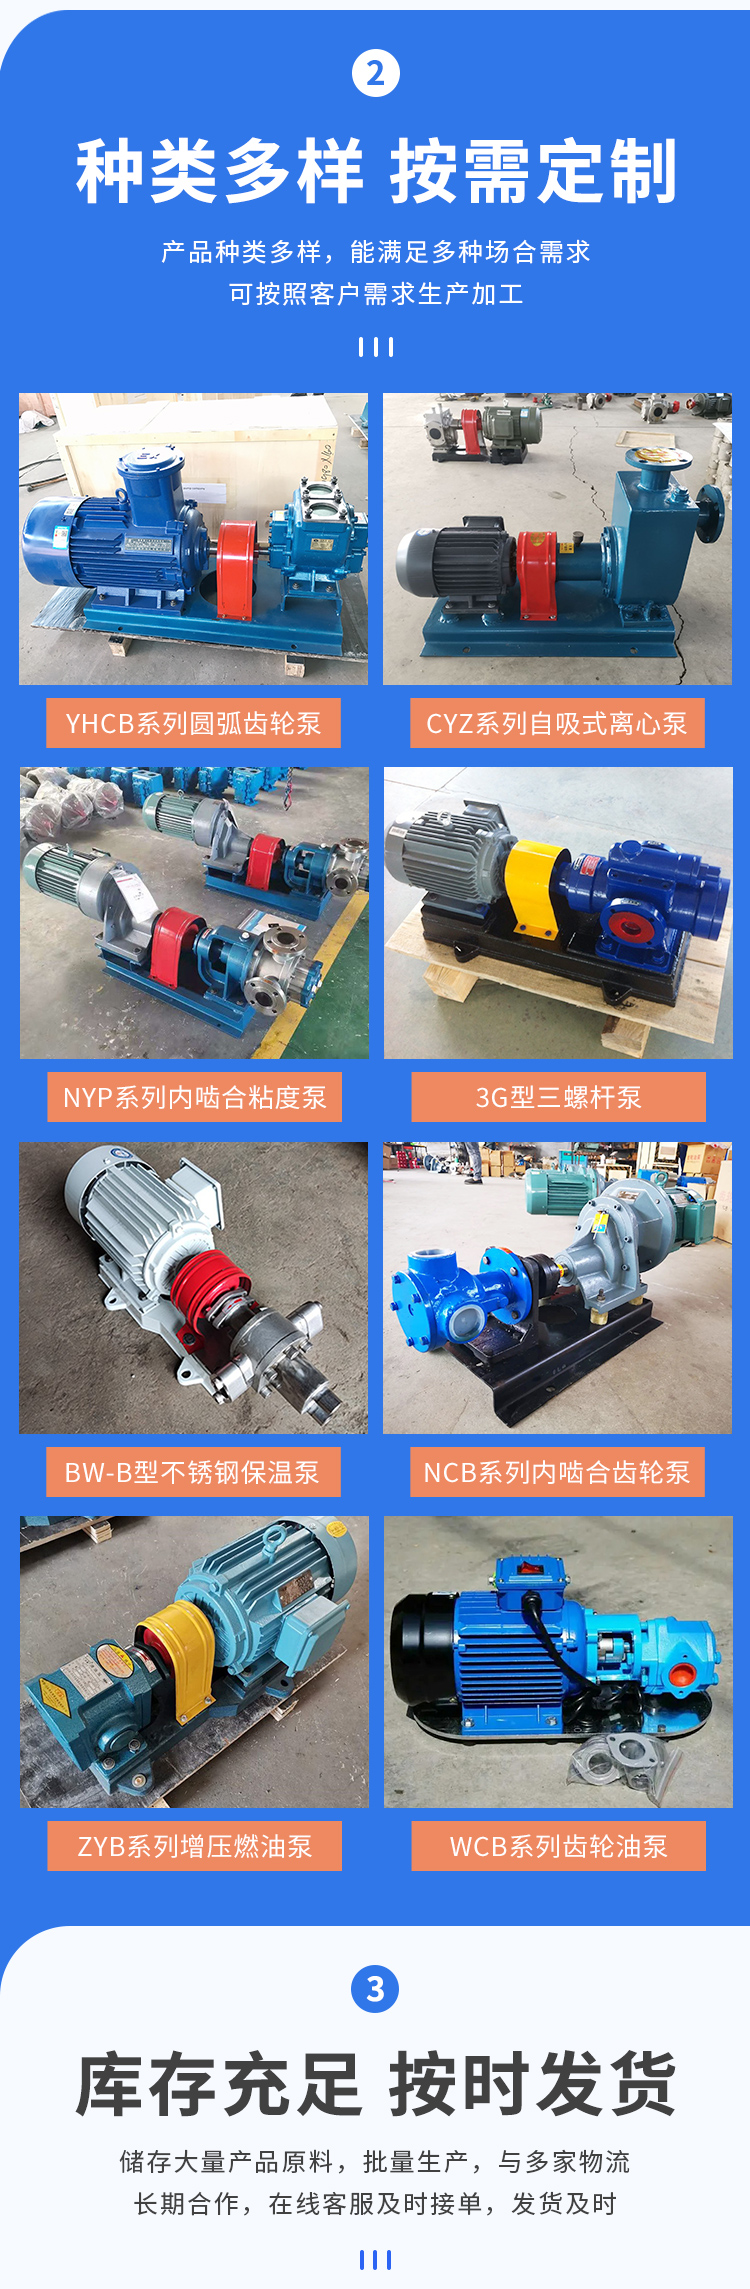 2CY2.1 stainless steel gear pump gear oil transfer pump electric fuel transfer pump